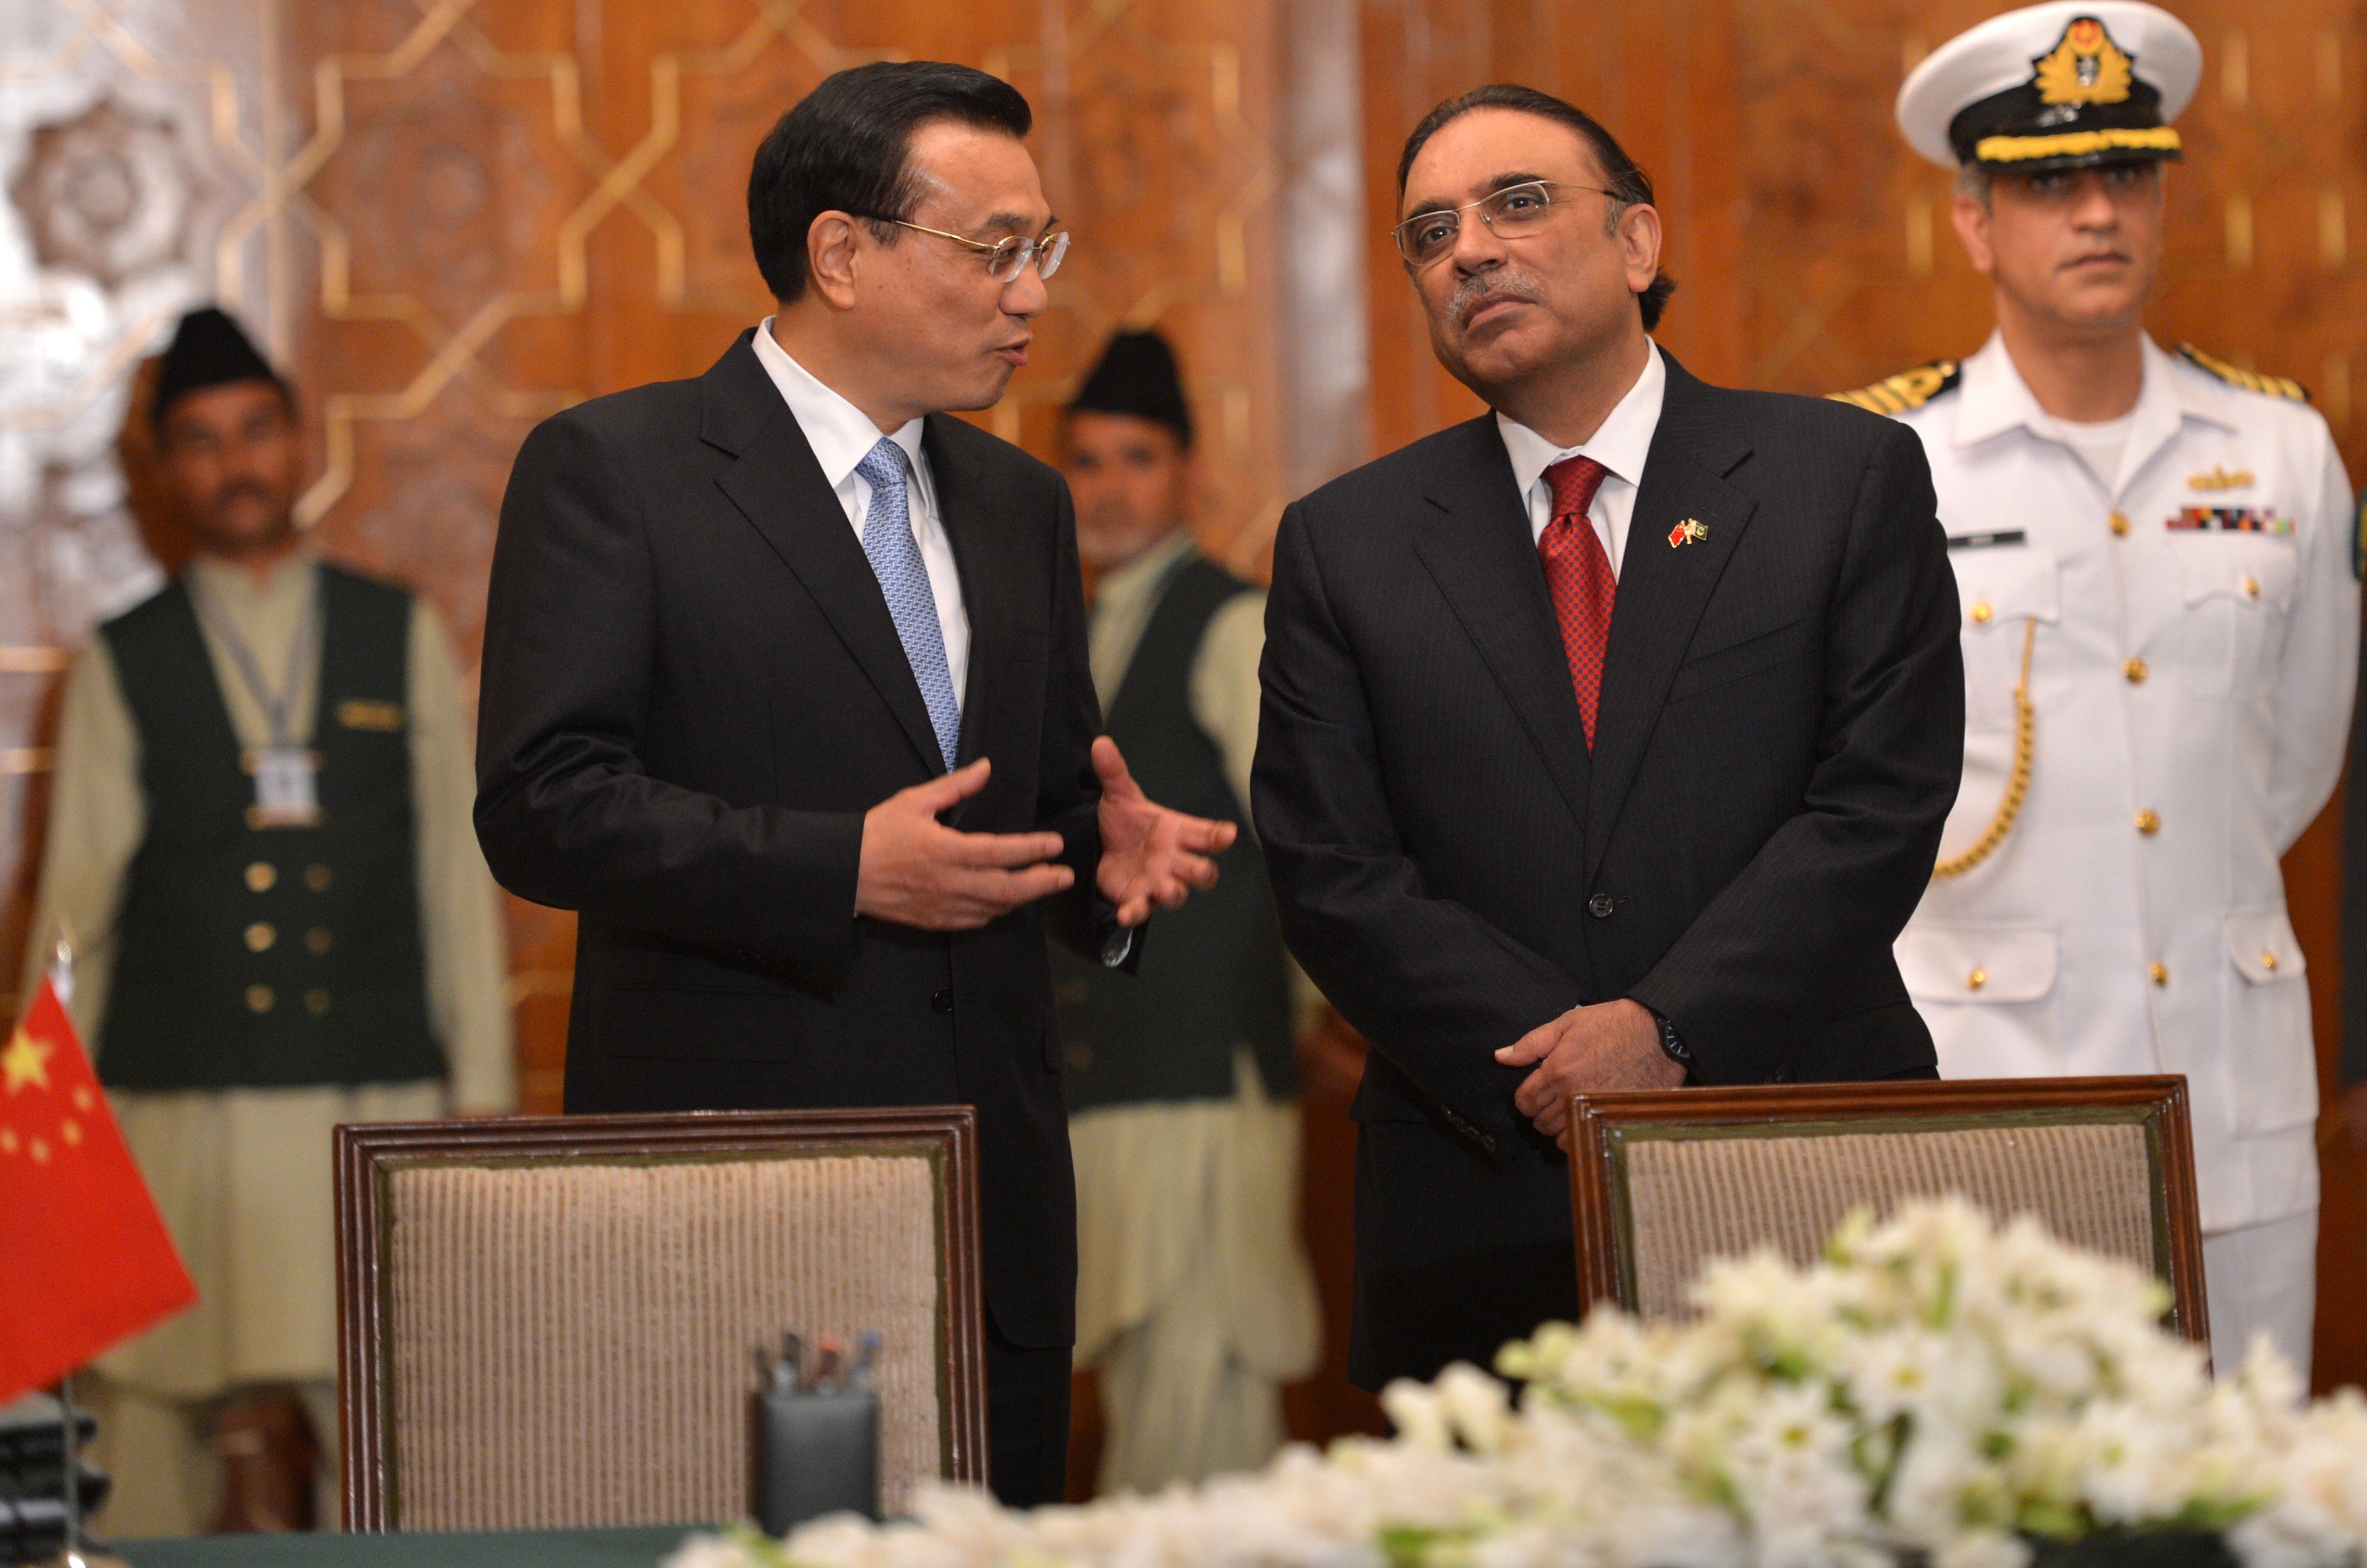 Chinese Premier Li Keqiang with Asif Ali Zardari, Pakistan’s president in 2013. Photo: AFP